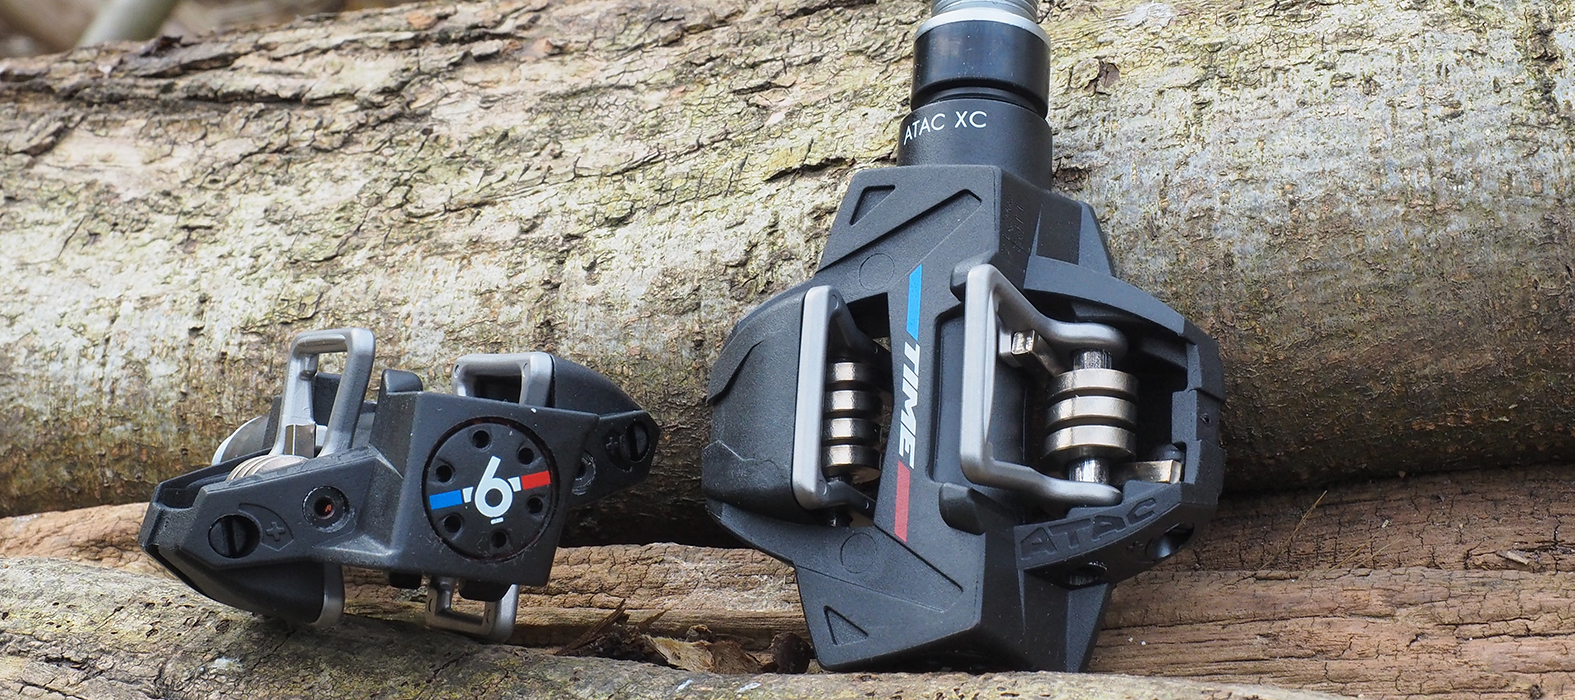 estaño Ejército suspicaz Time ATAC XC6 pedal review | BikePerfect